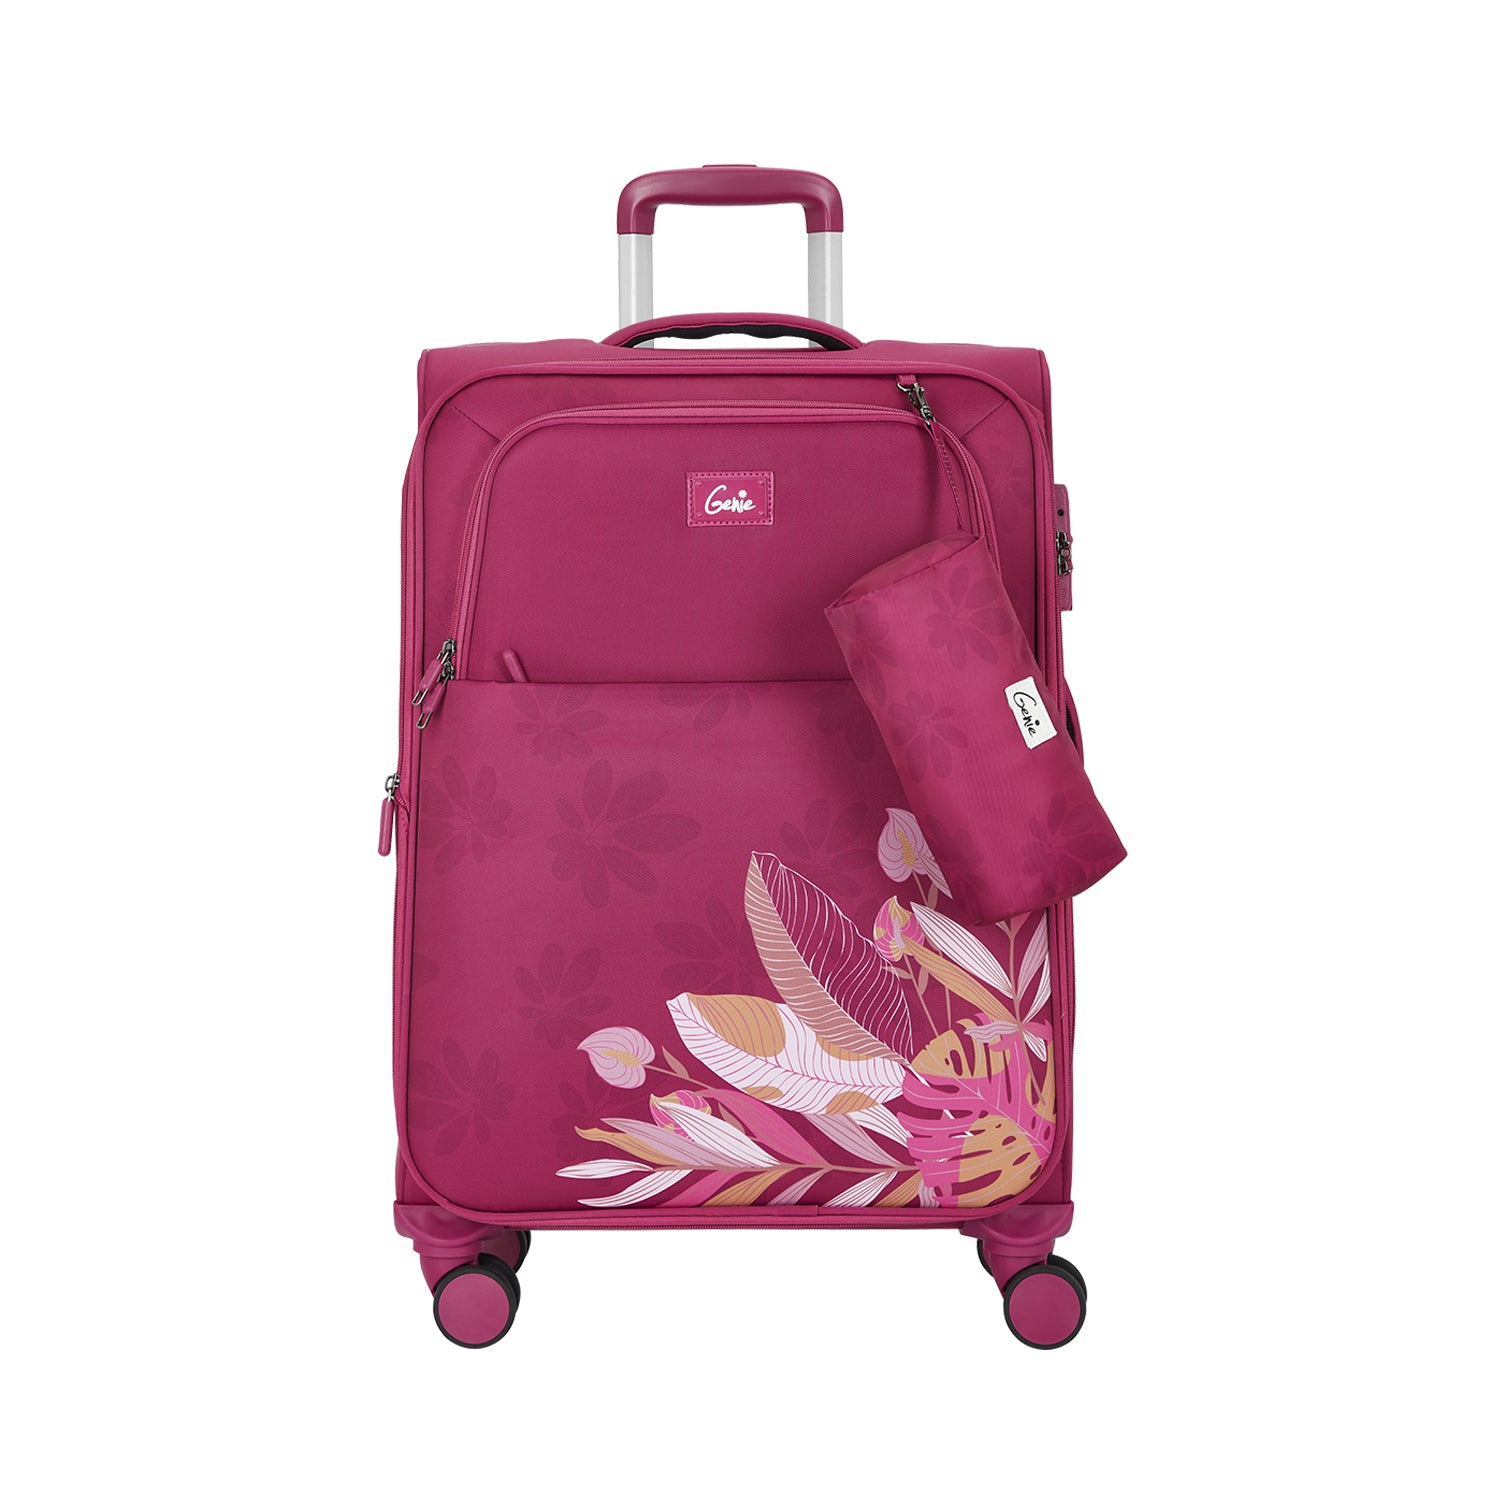 Genie Bloom Wine Red Trolley Bag With Dual Wheels & TSA Lock